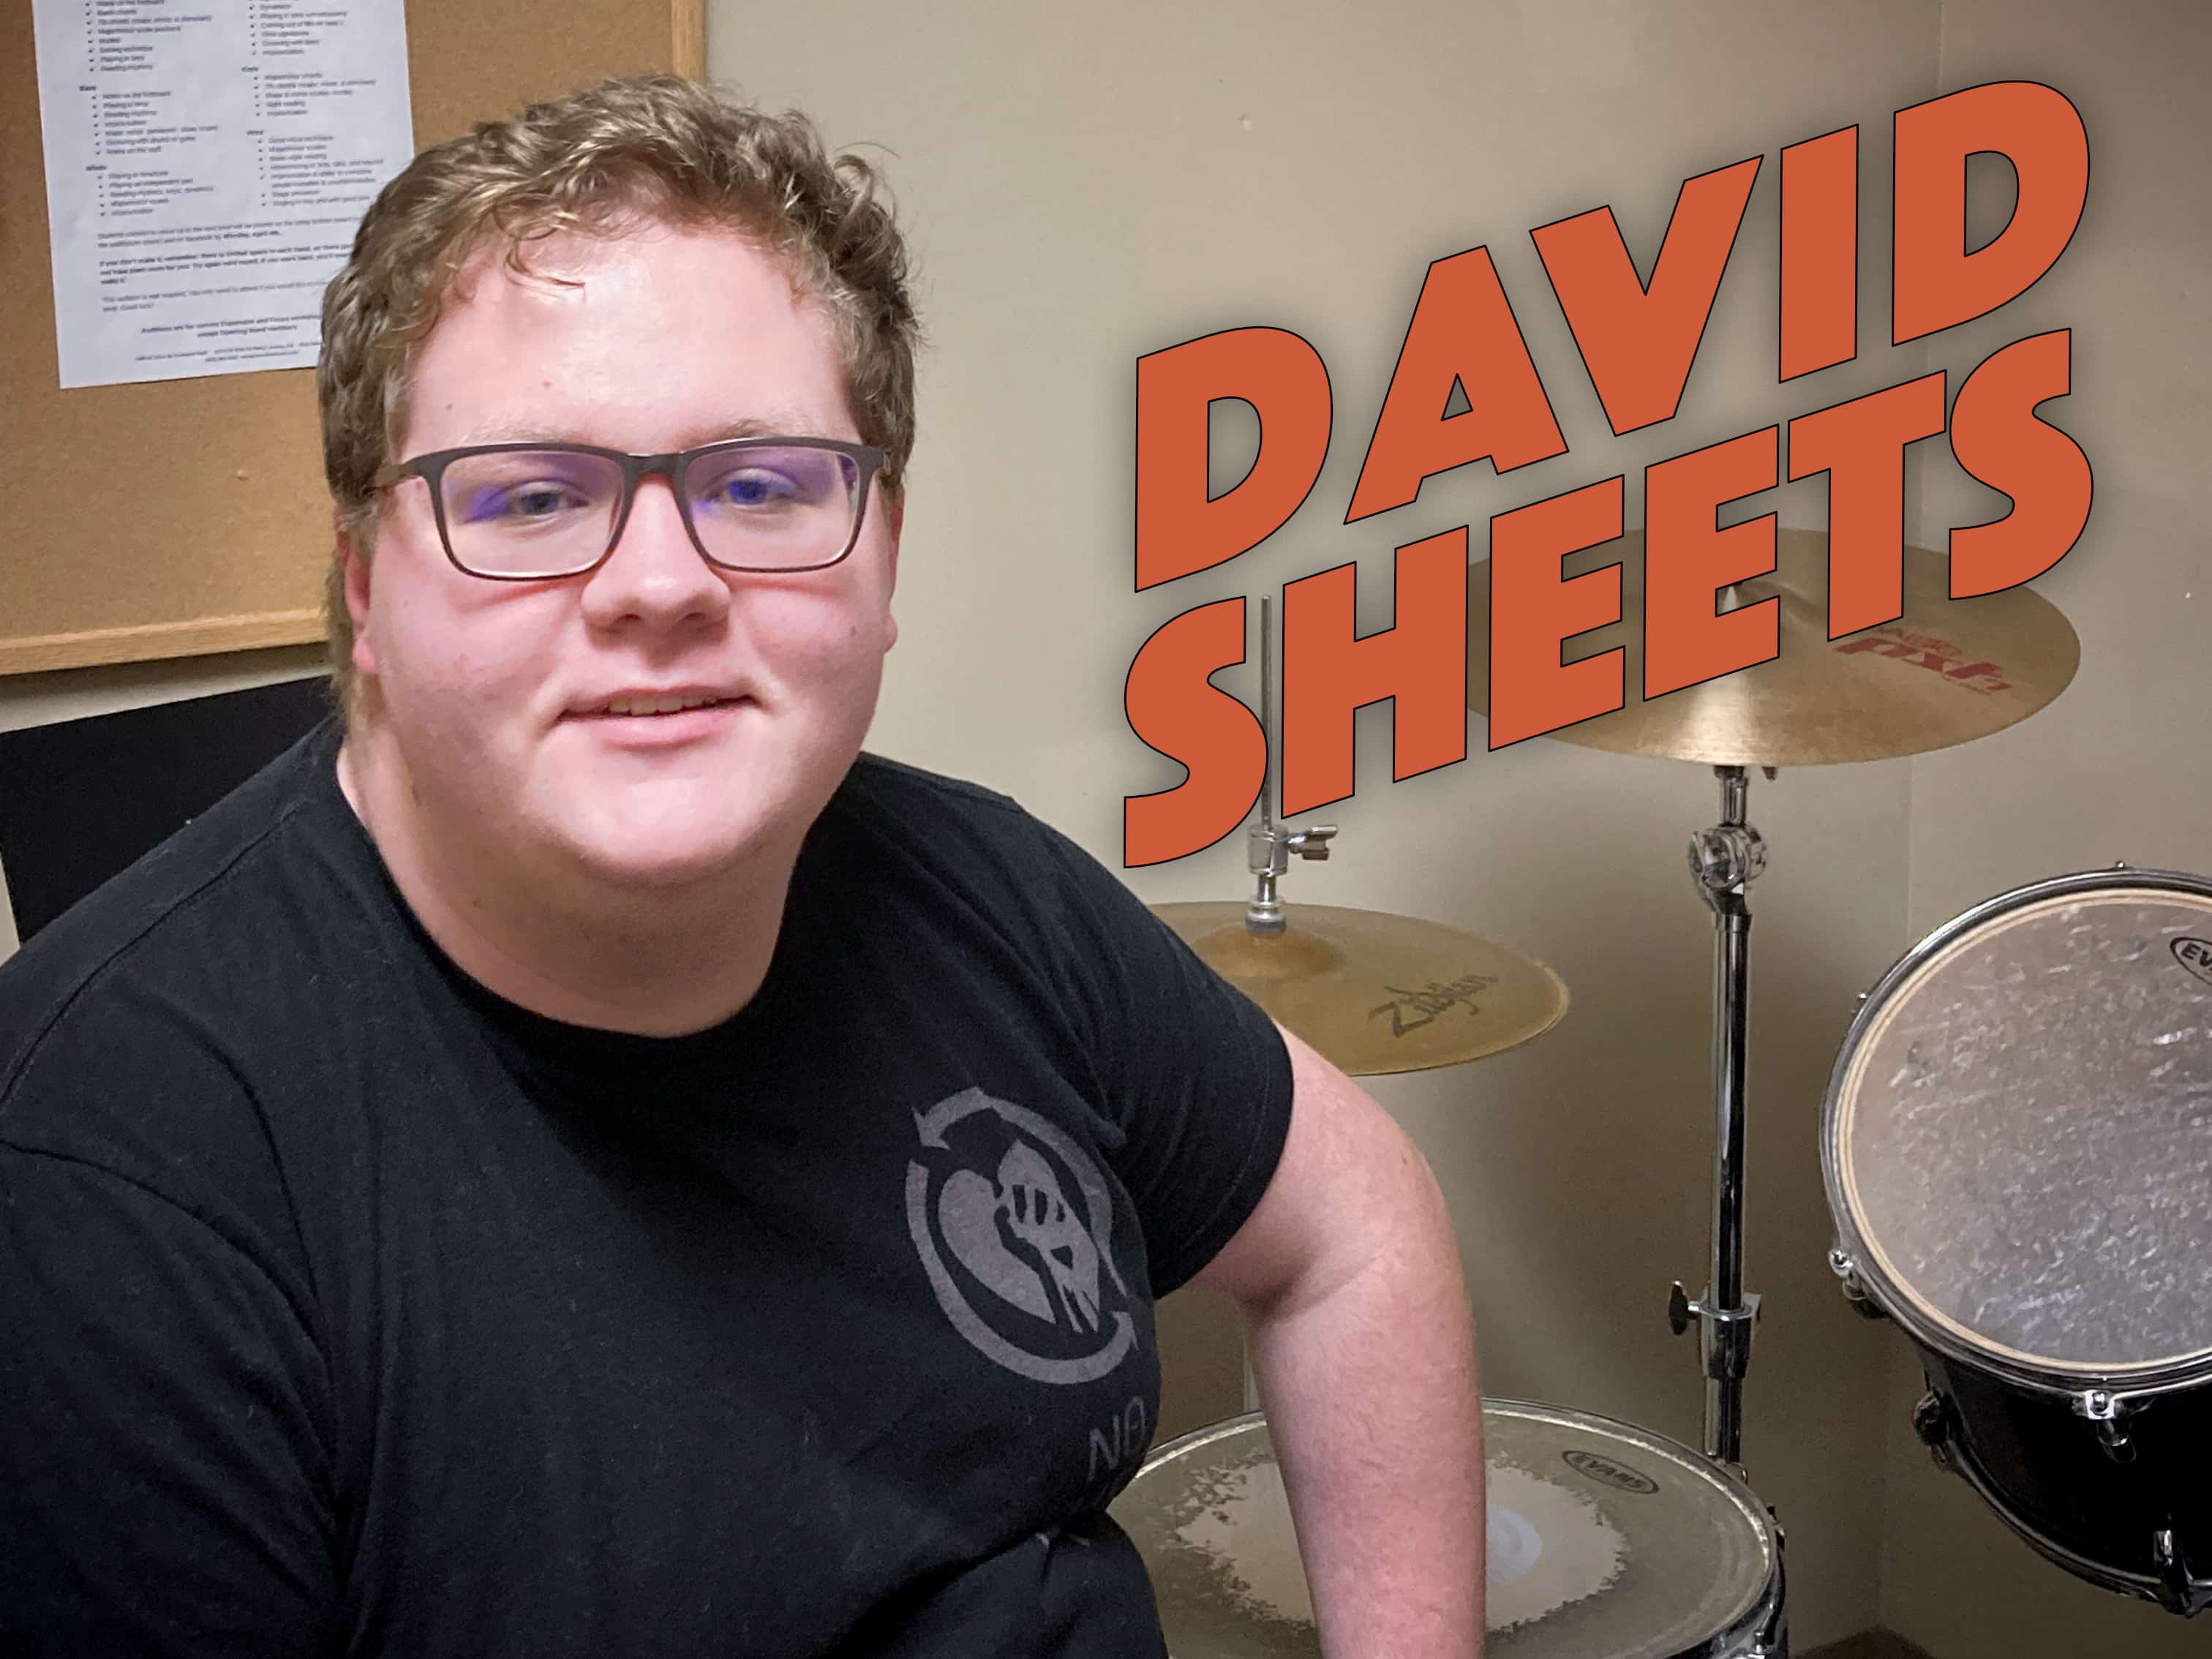 Drum student David Sheets